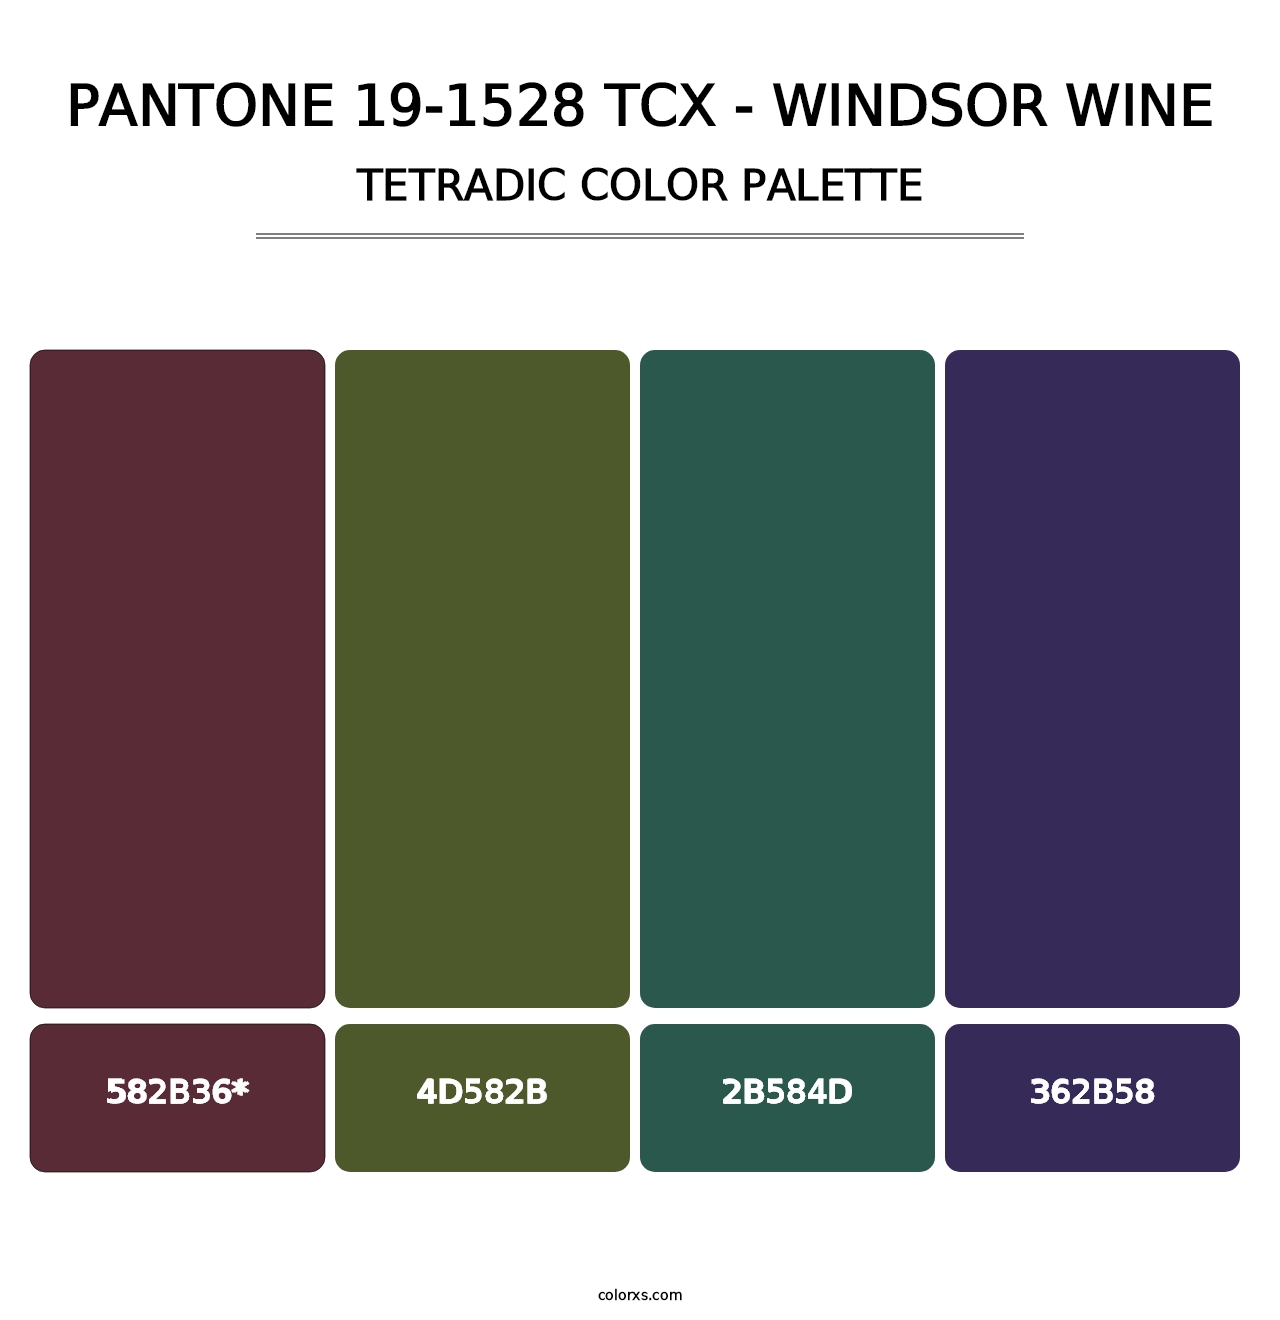 PANTONE 19-1528 TCX - Windsor Wine - Tetradic Color Palette